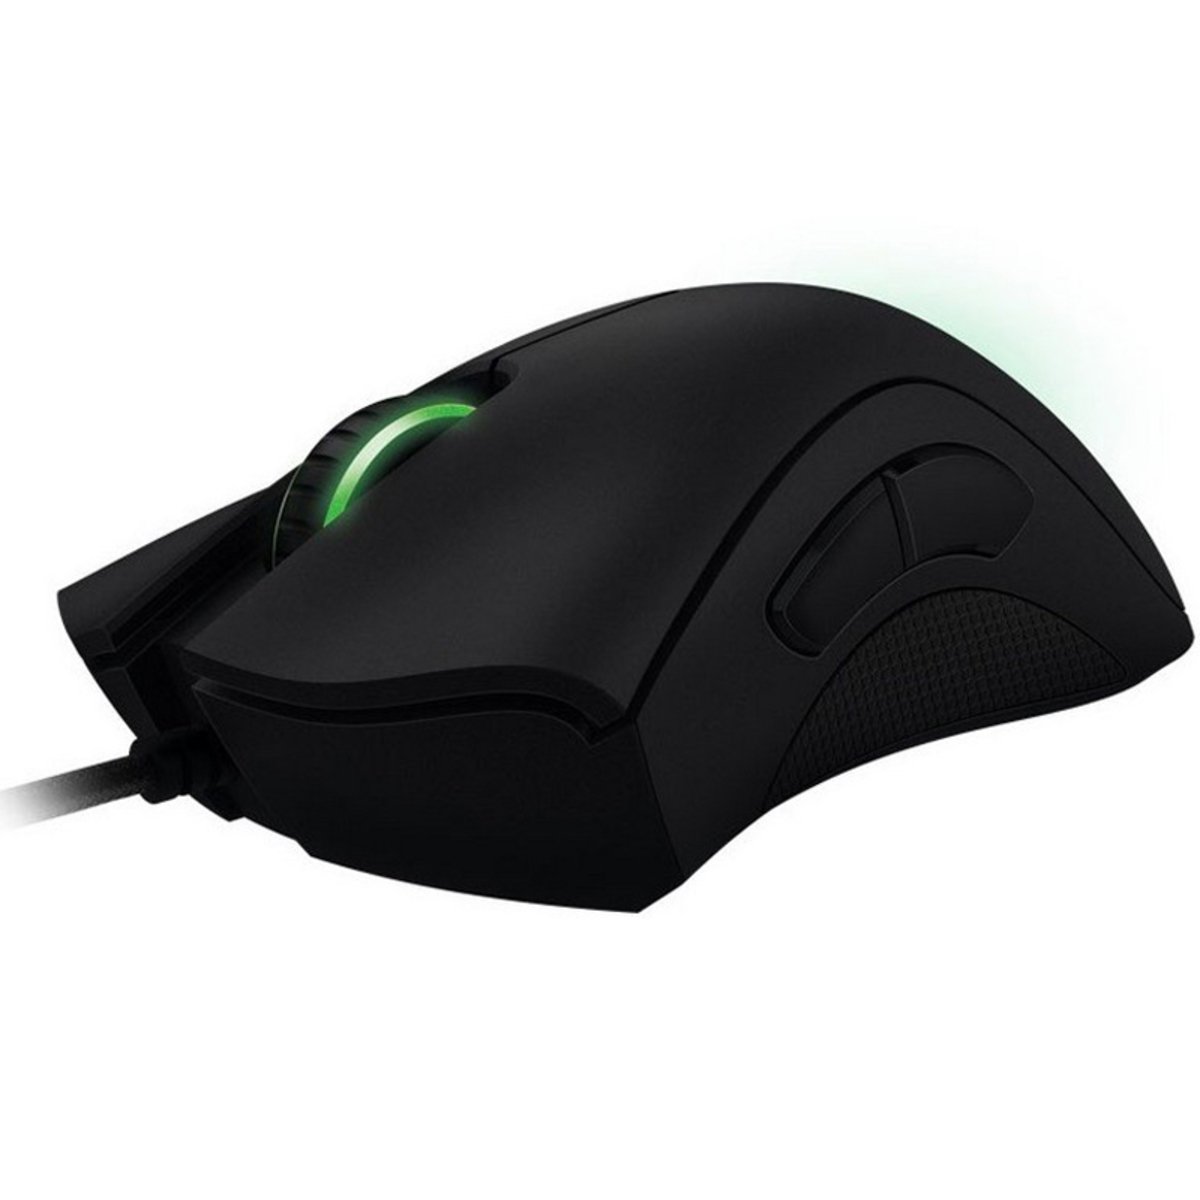 Razer Gaming Mouse Deathadder